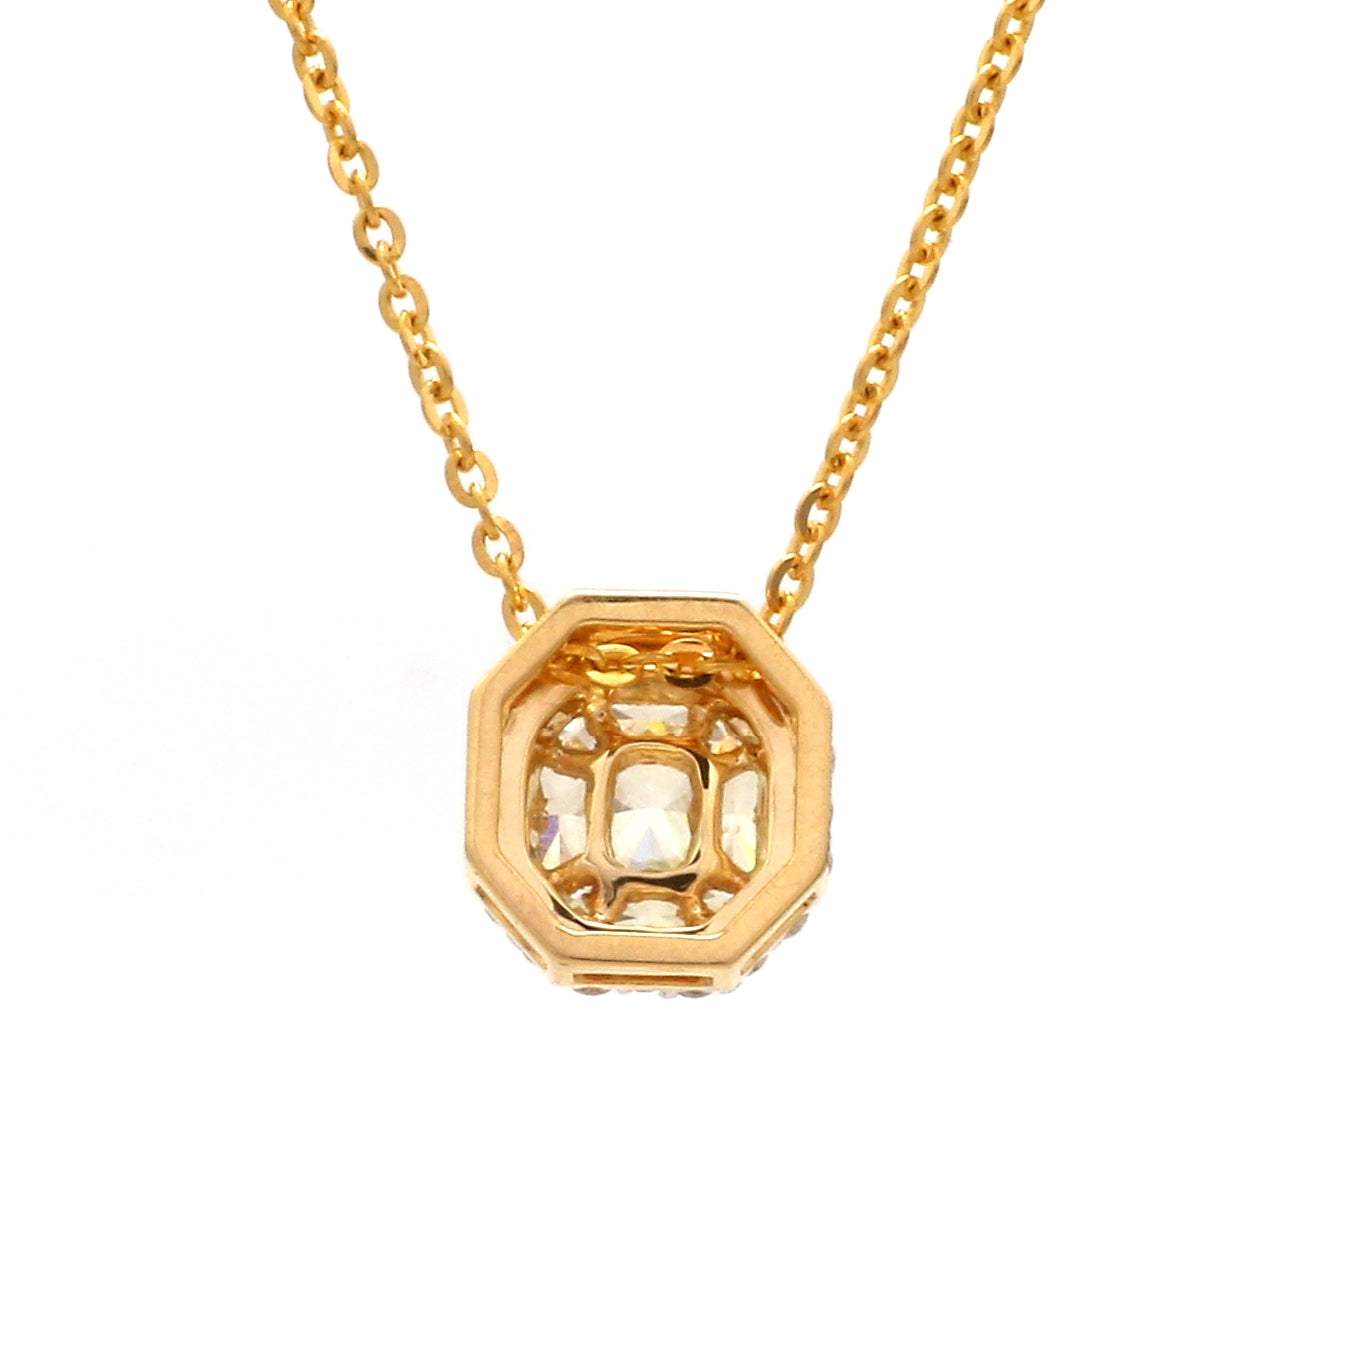 18K Yellow Gold  Pendant Chain with Fancy Color Diamond JL AU P 10   Jewelove